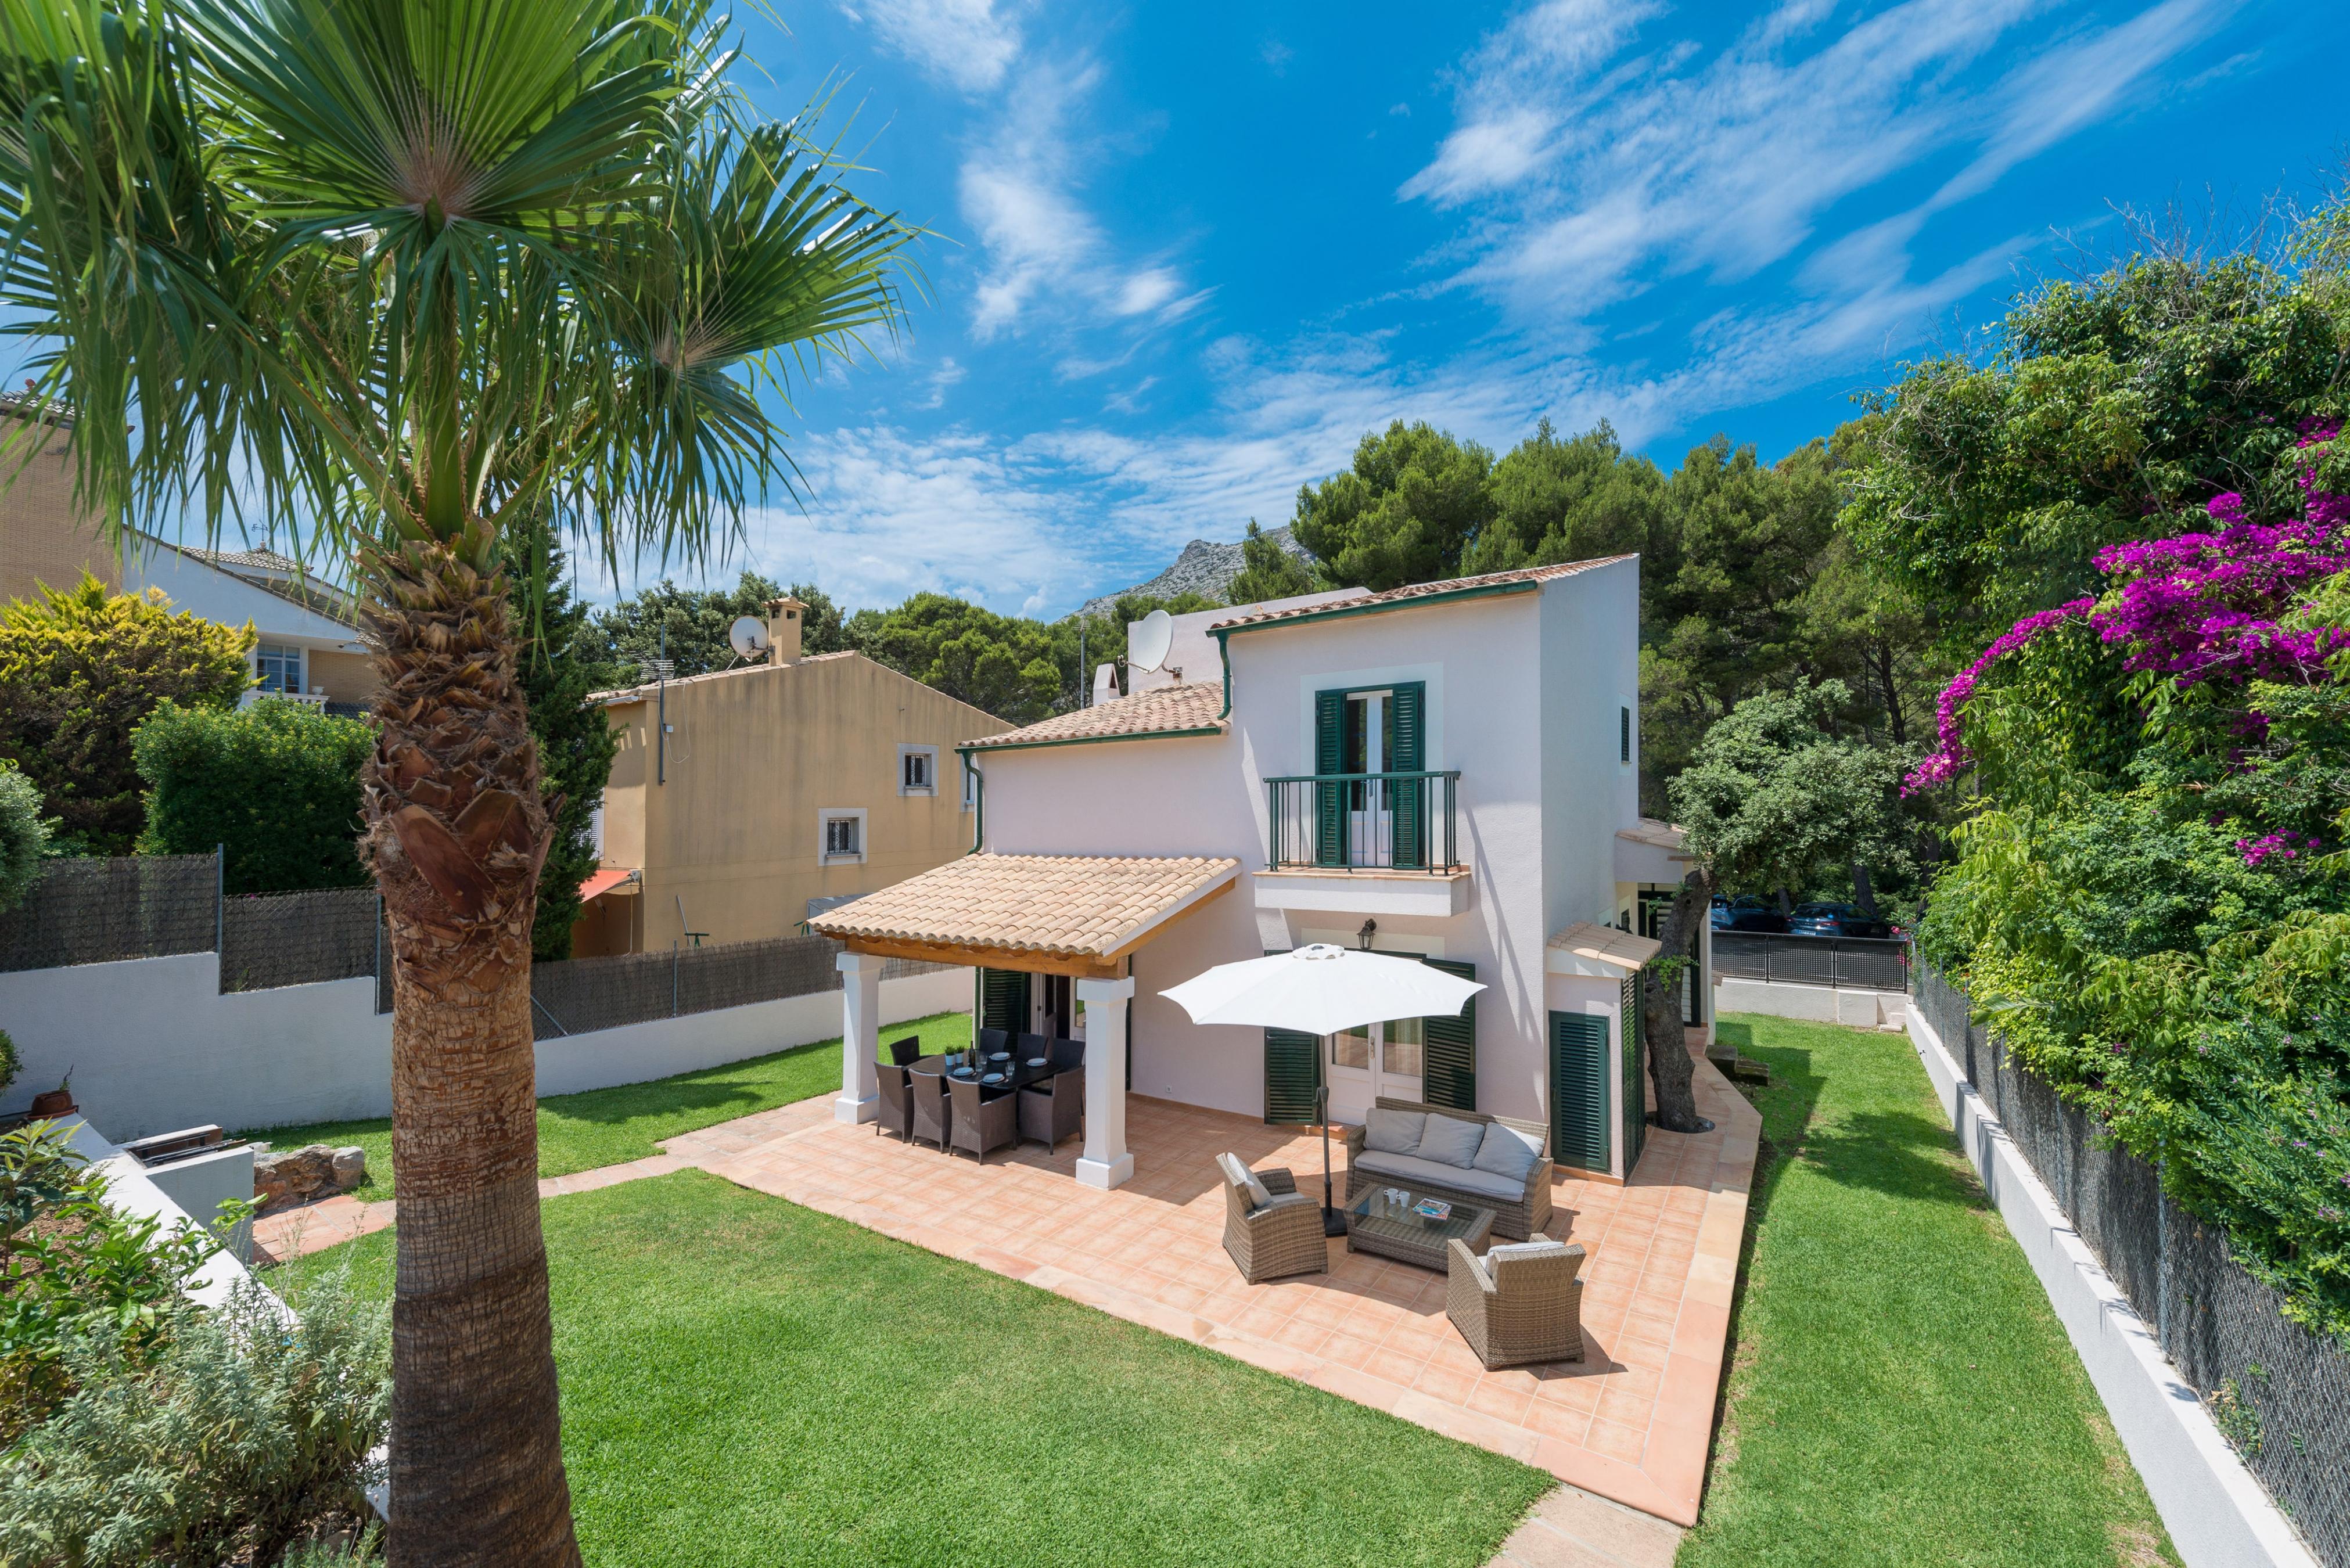 Property Image 2 - EL PINAR  - Villa with private pool in Cala Sant Vicenç. Free WiFi